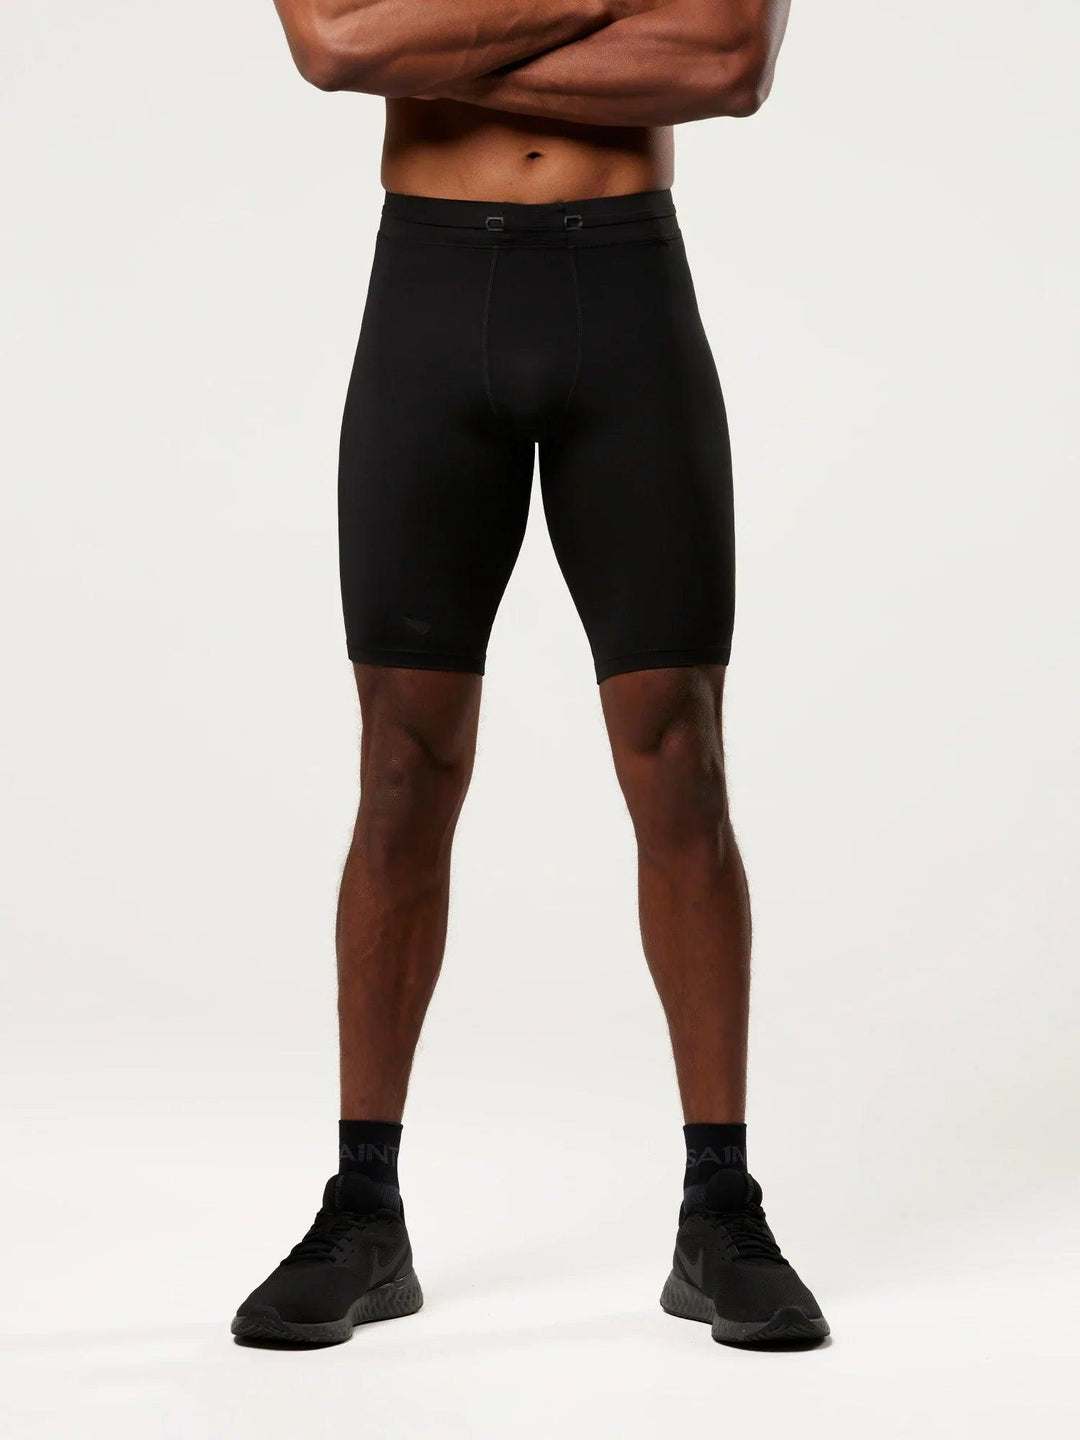 Men's Compression Shorts - Black